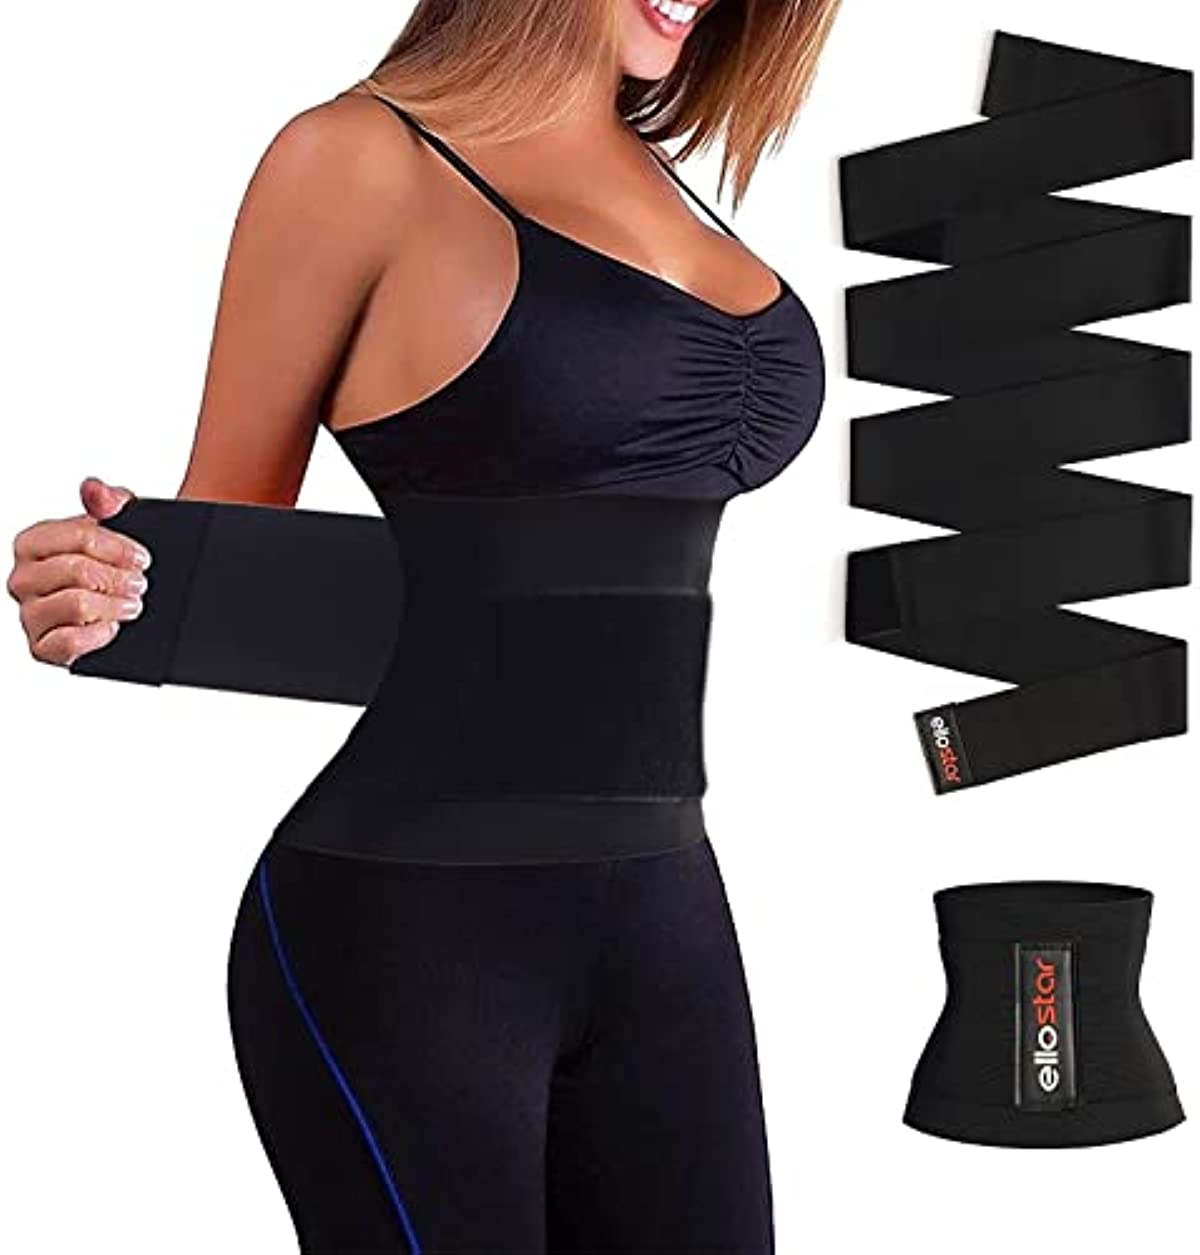 ellostar Waist Wrap Waist Trainer Tummy Control Band Waistline Bandage Body Shaper, Sweat Shapewear, Daily Use Workout Belt